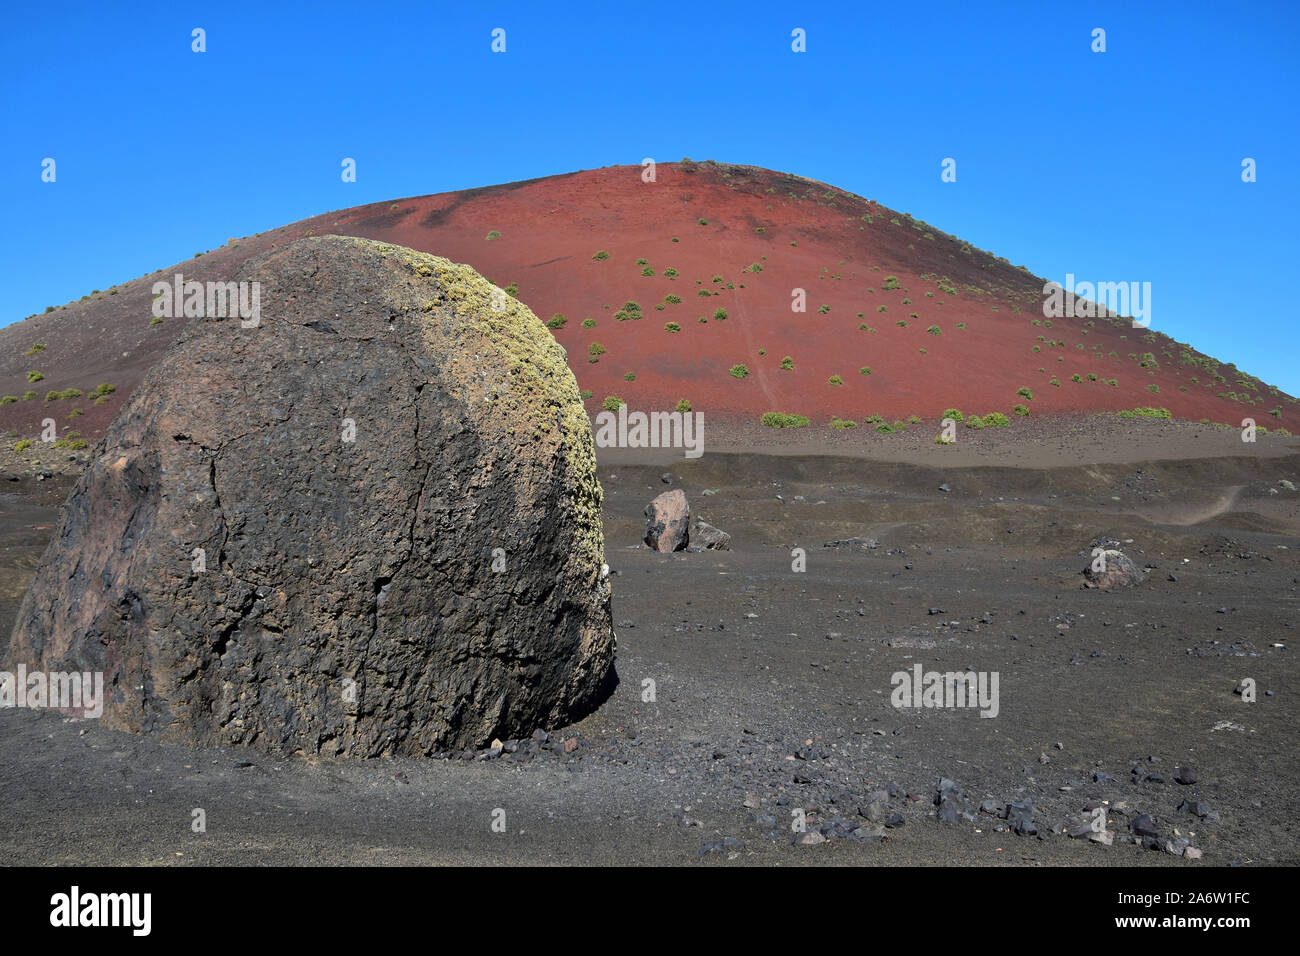 La grande bombe de lave près du volcan rouge Montana Colorada en Lanzarote, Espagne. Banque D'Images